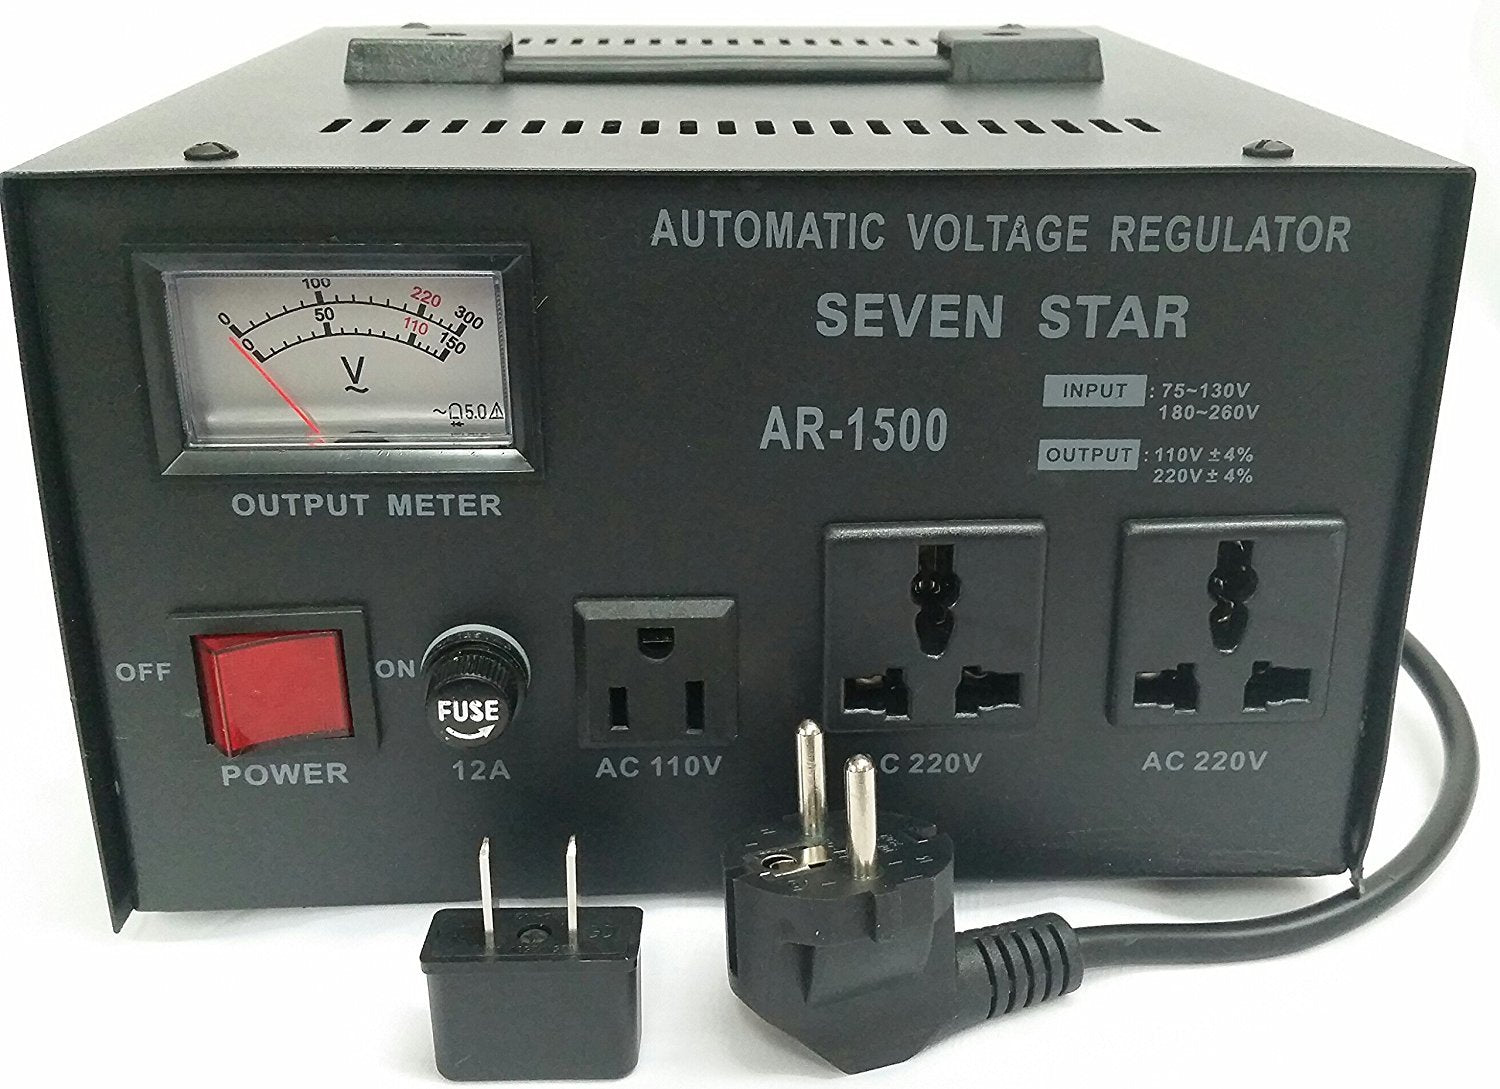 Pitbull Automatic Voltage Regulator